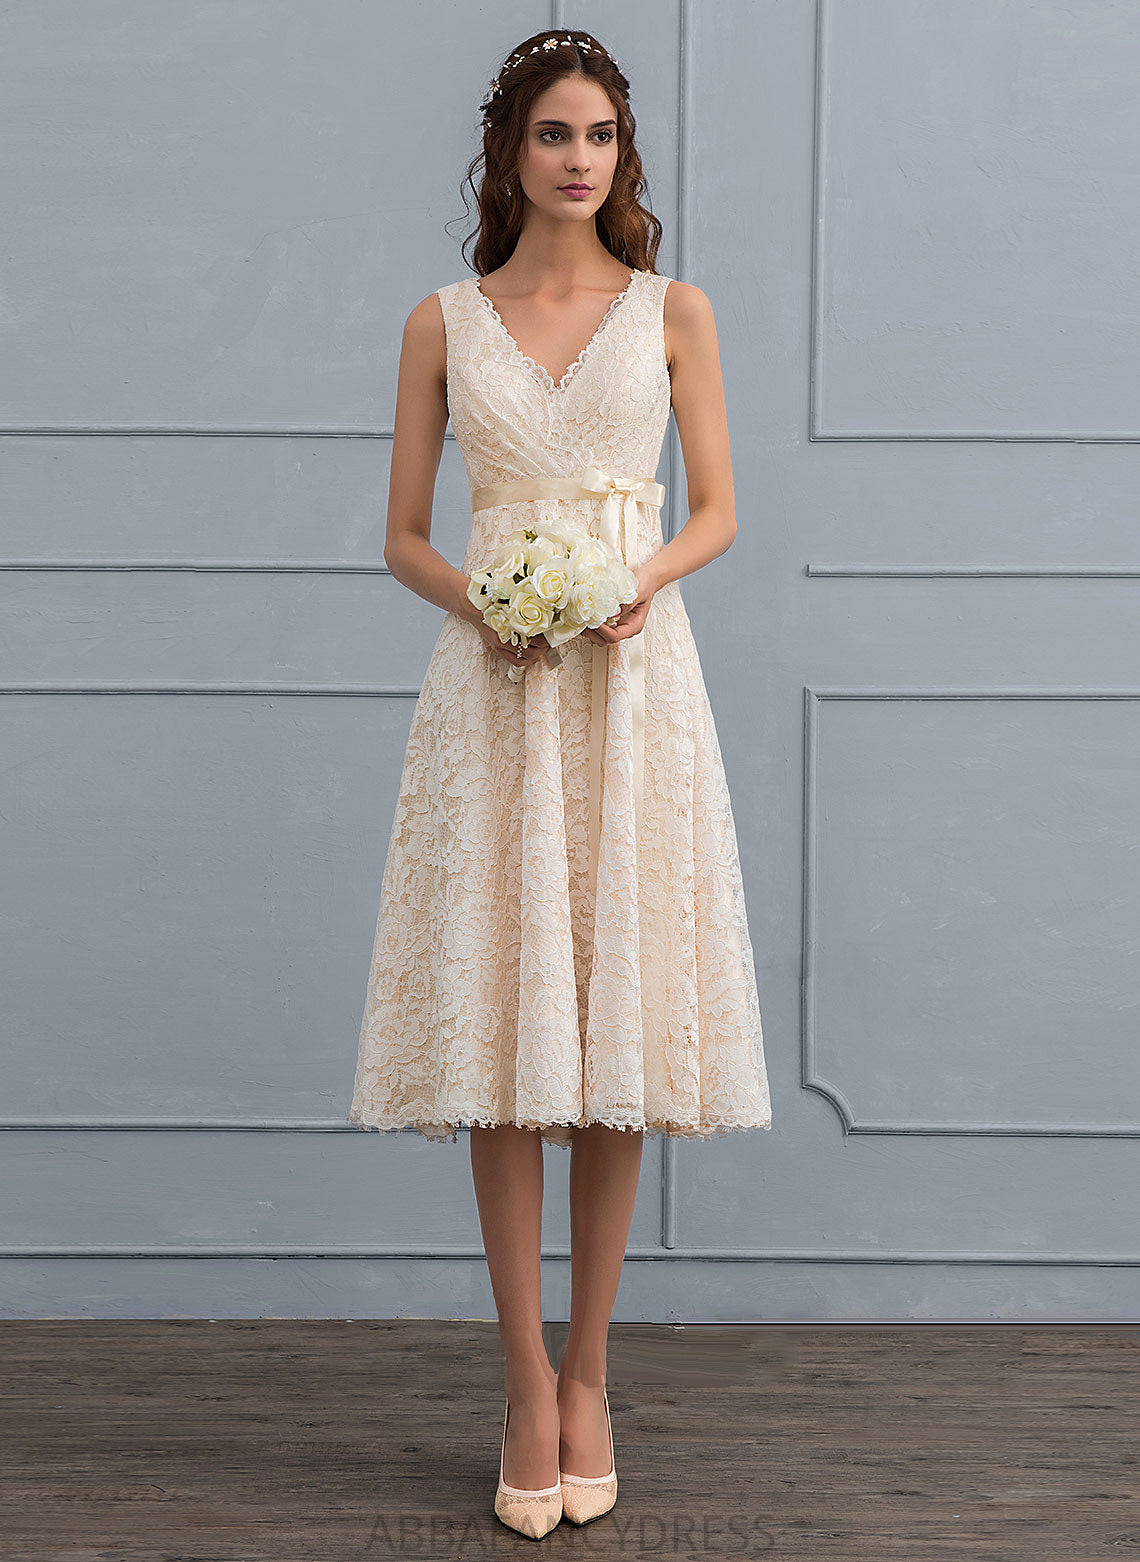 Selah Wedding Dresses A-Line Lace Wedding With Bow(s) Knee-Length Dress V-neck